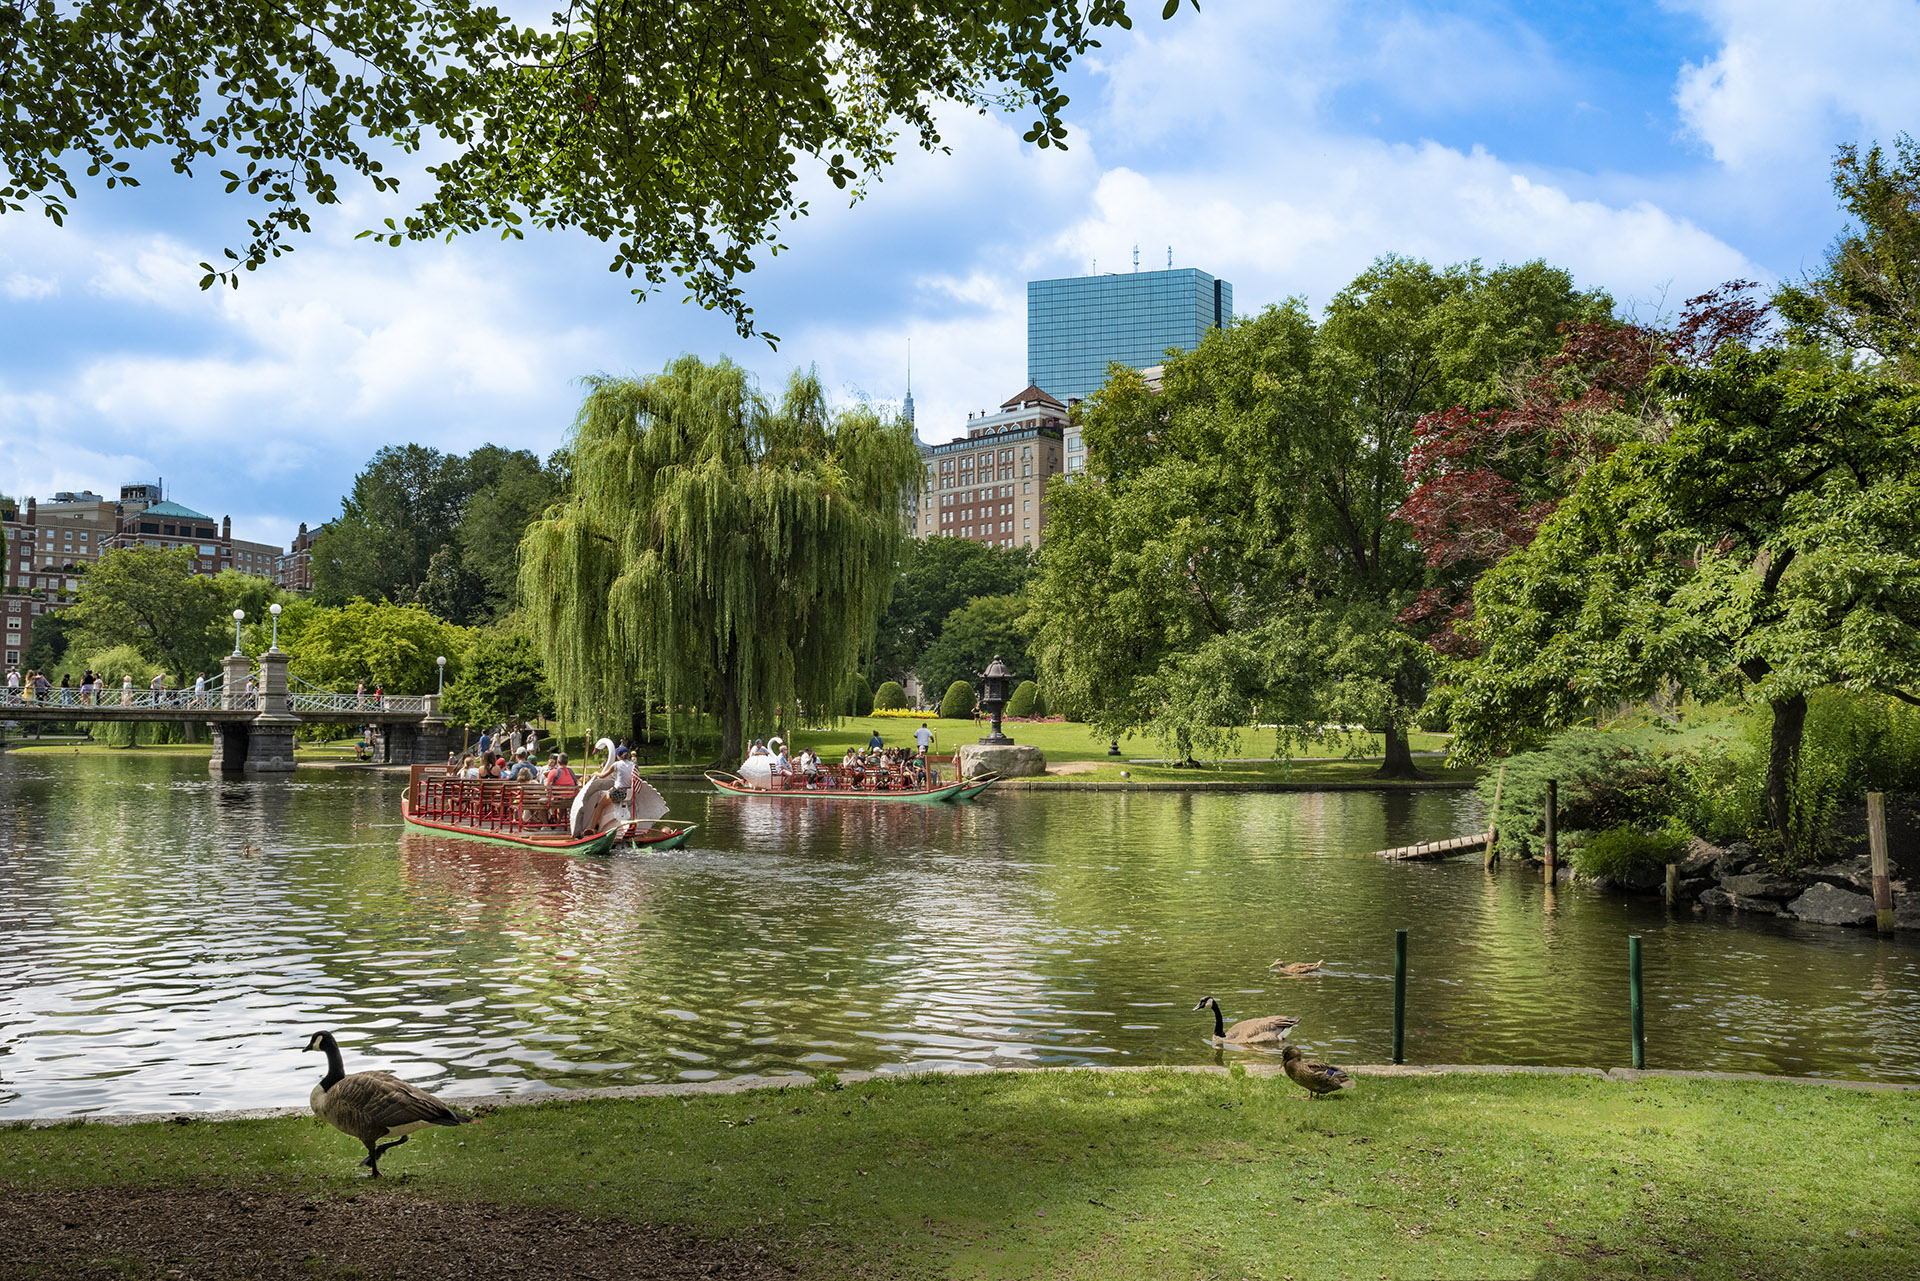 Beacon Hill district of Boston, MA, USA. Boston Common, Public Gardens, Swan Boats on the lake.